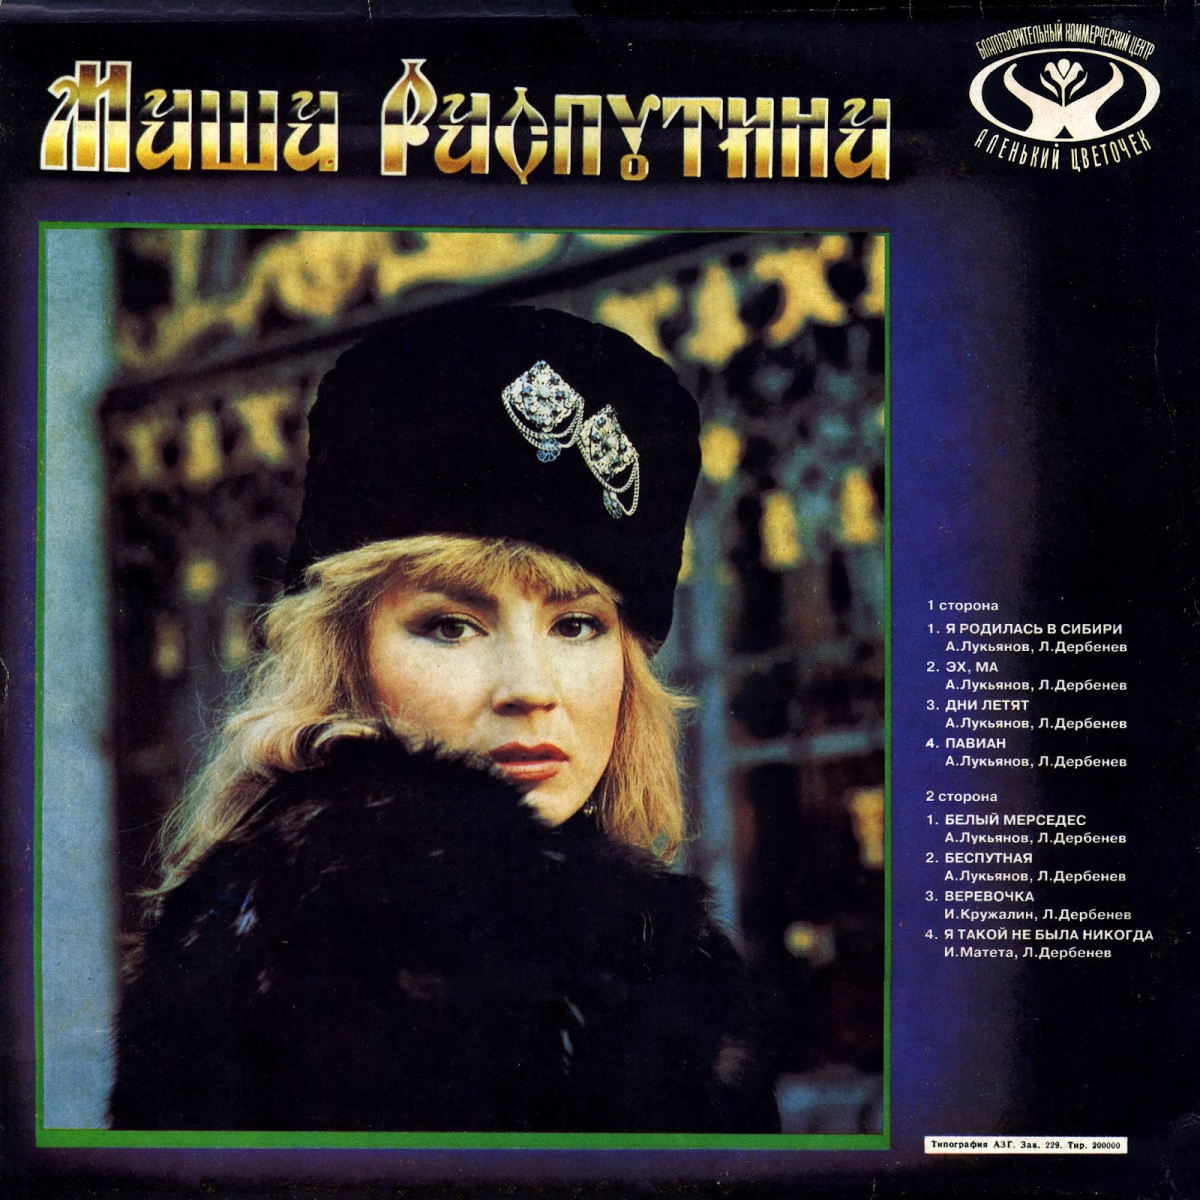 Masha Rasputina - Белый Мерседес Noten für Piano